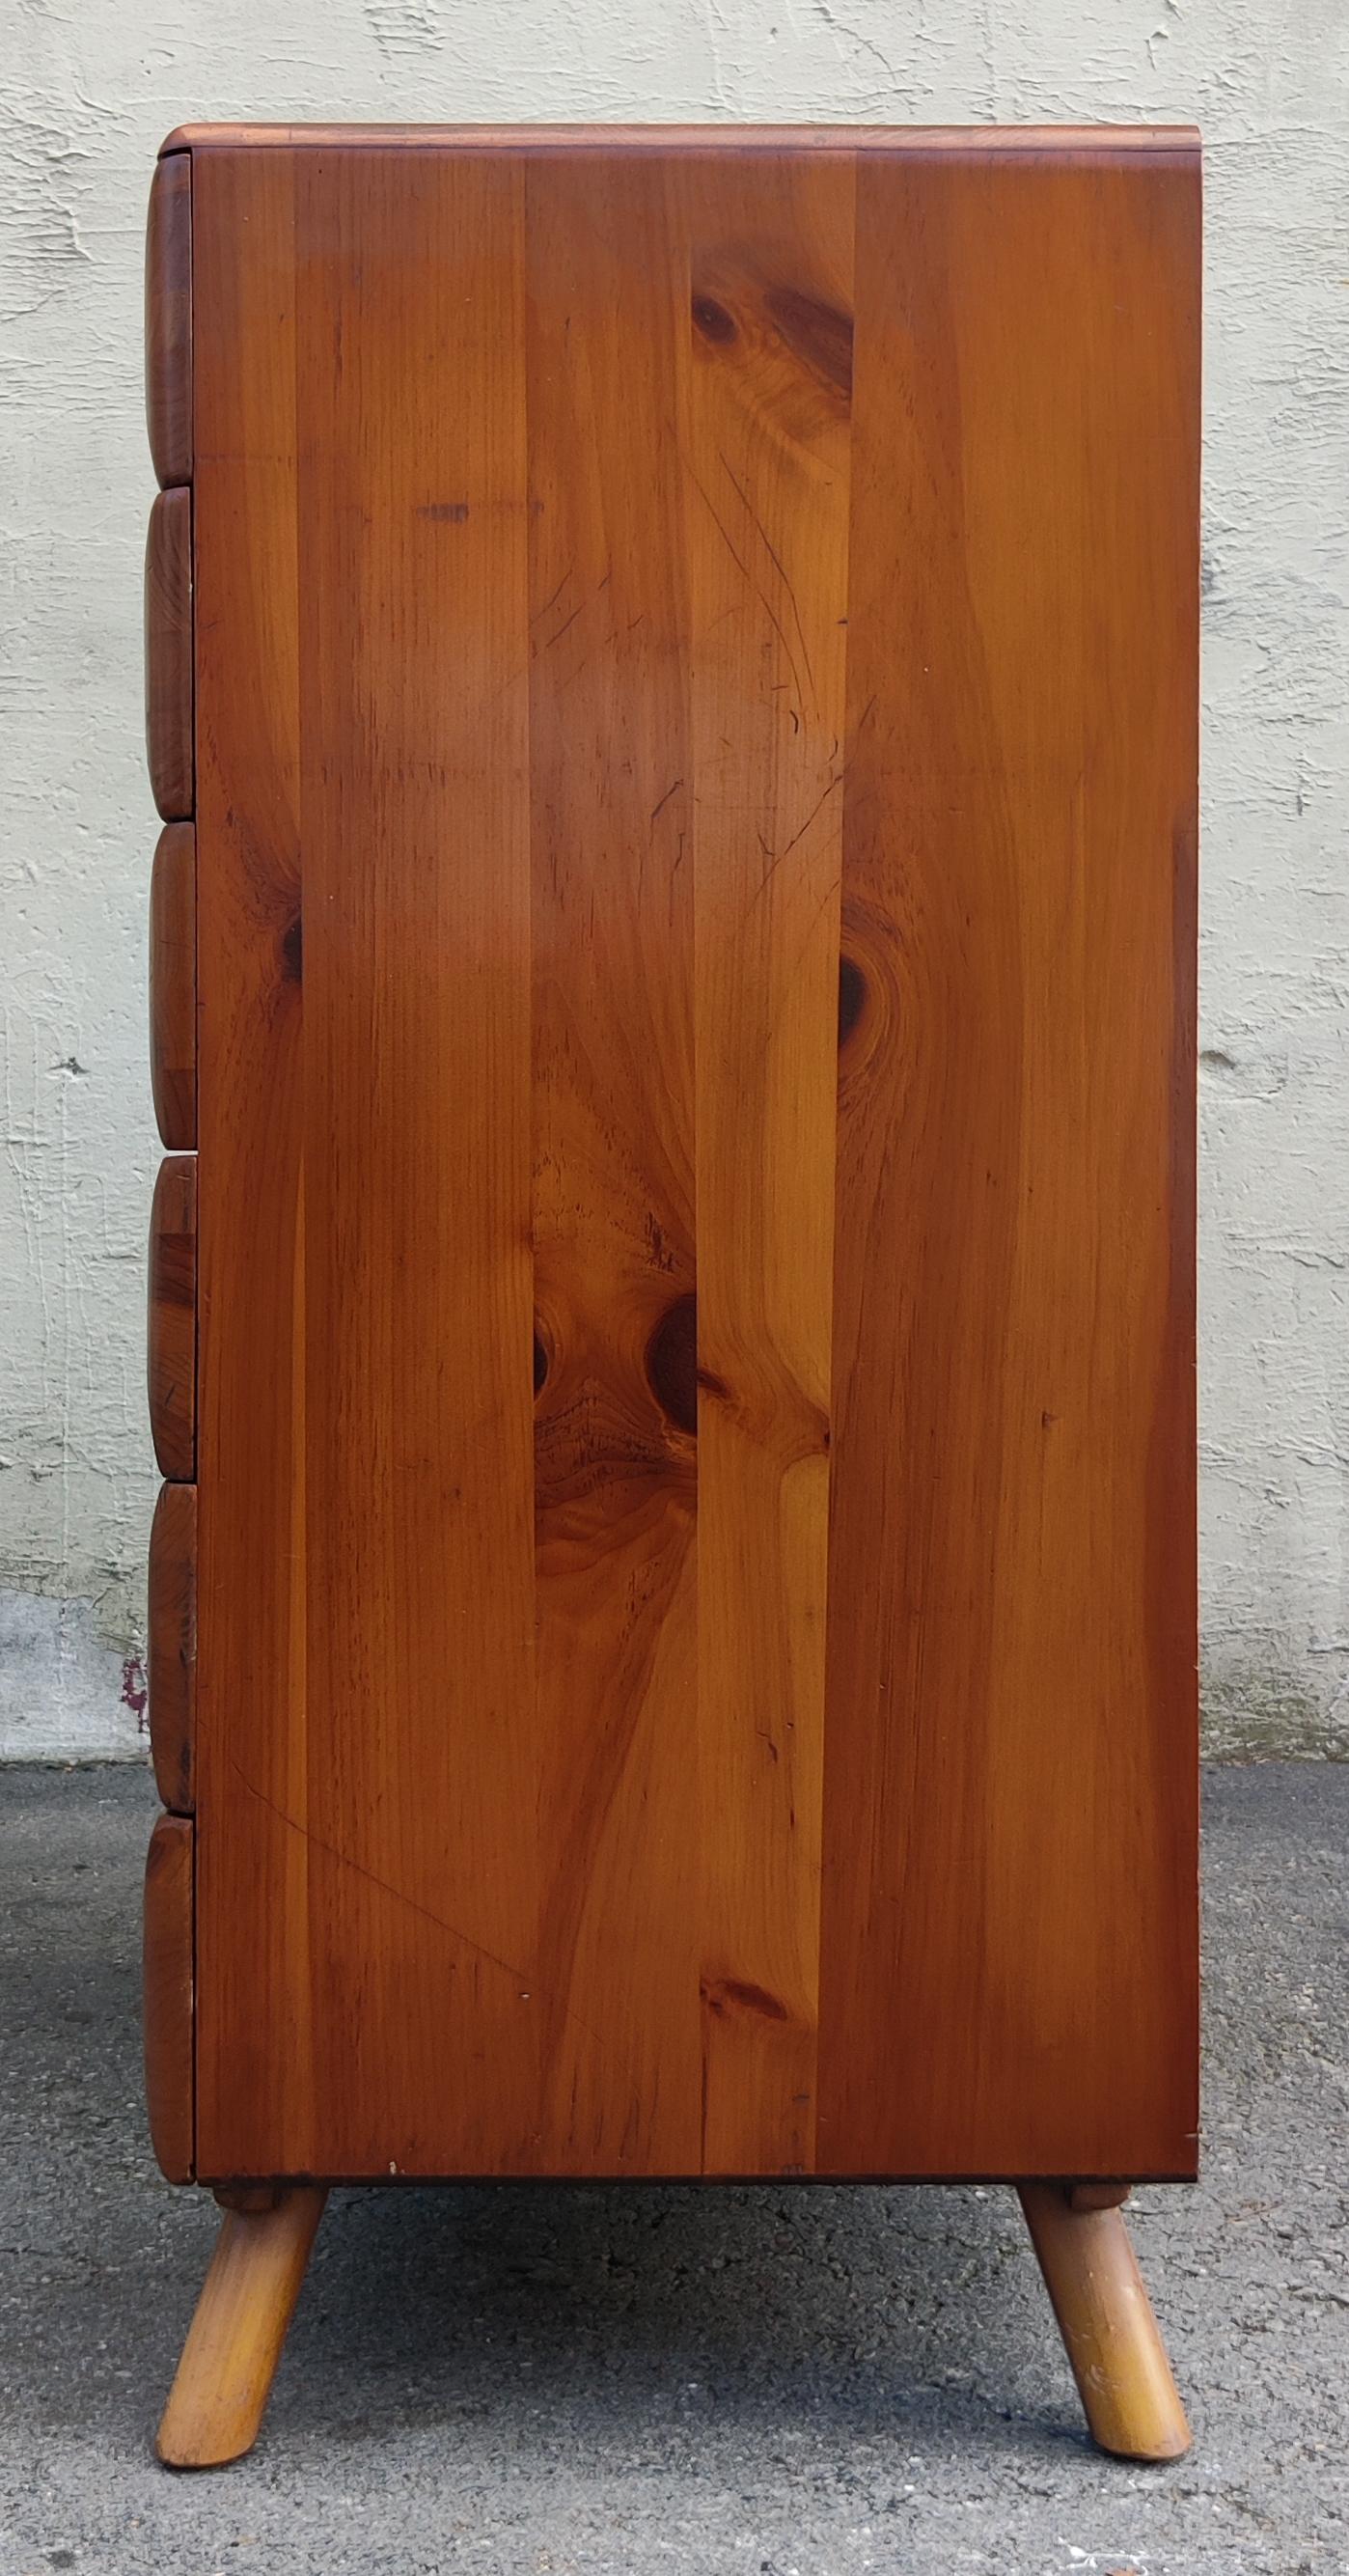 Franklin Shockey Sculptured Pine 6 Drawer Tall Dresser Mid-Century Modern 1970s For Sale 1